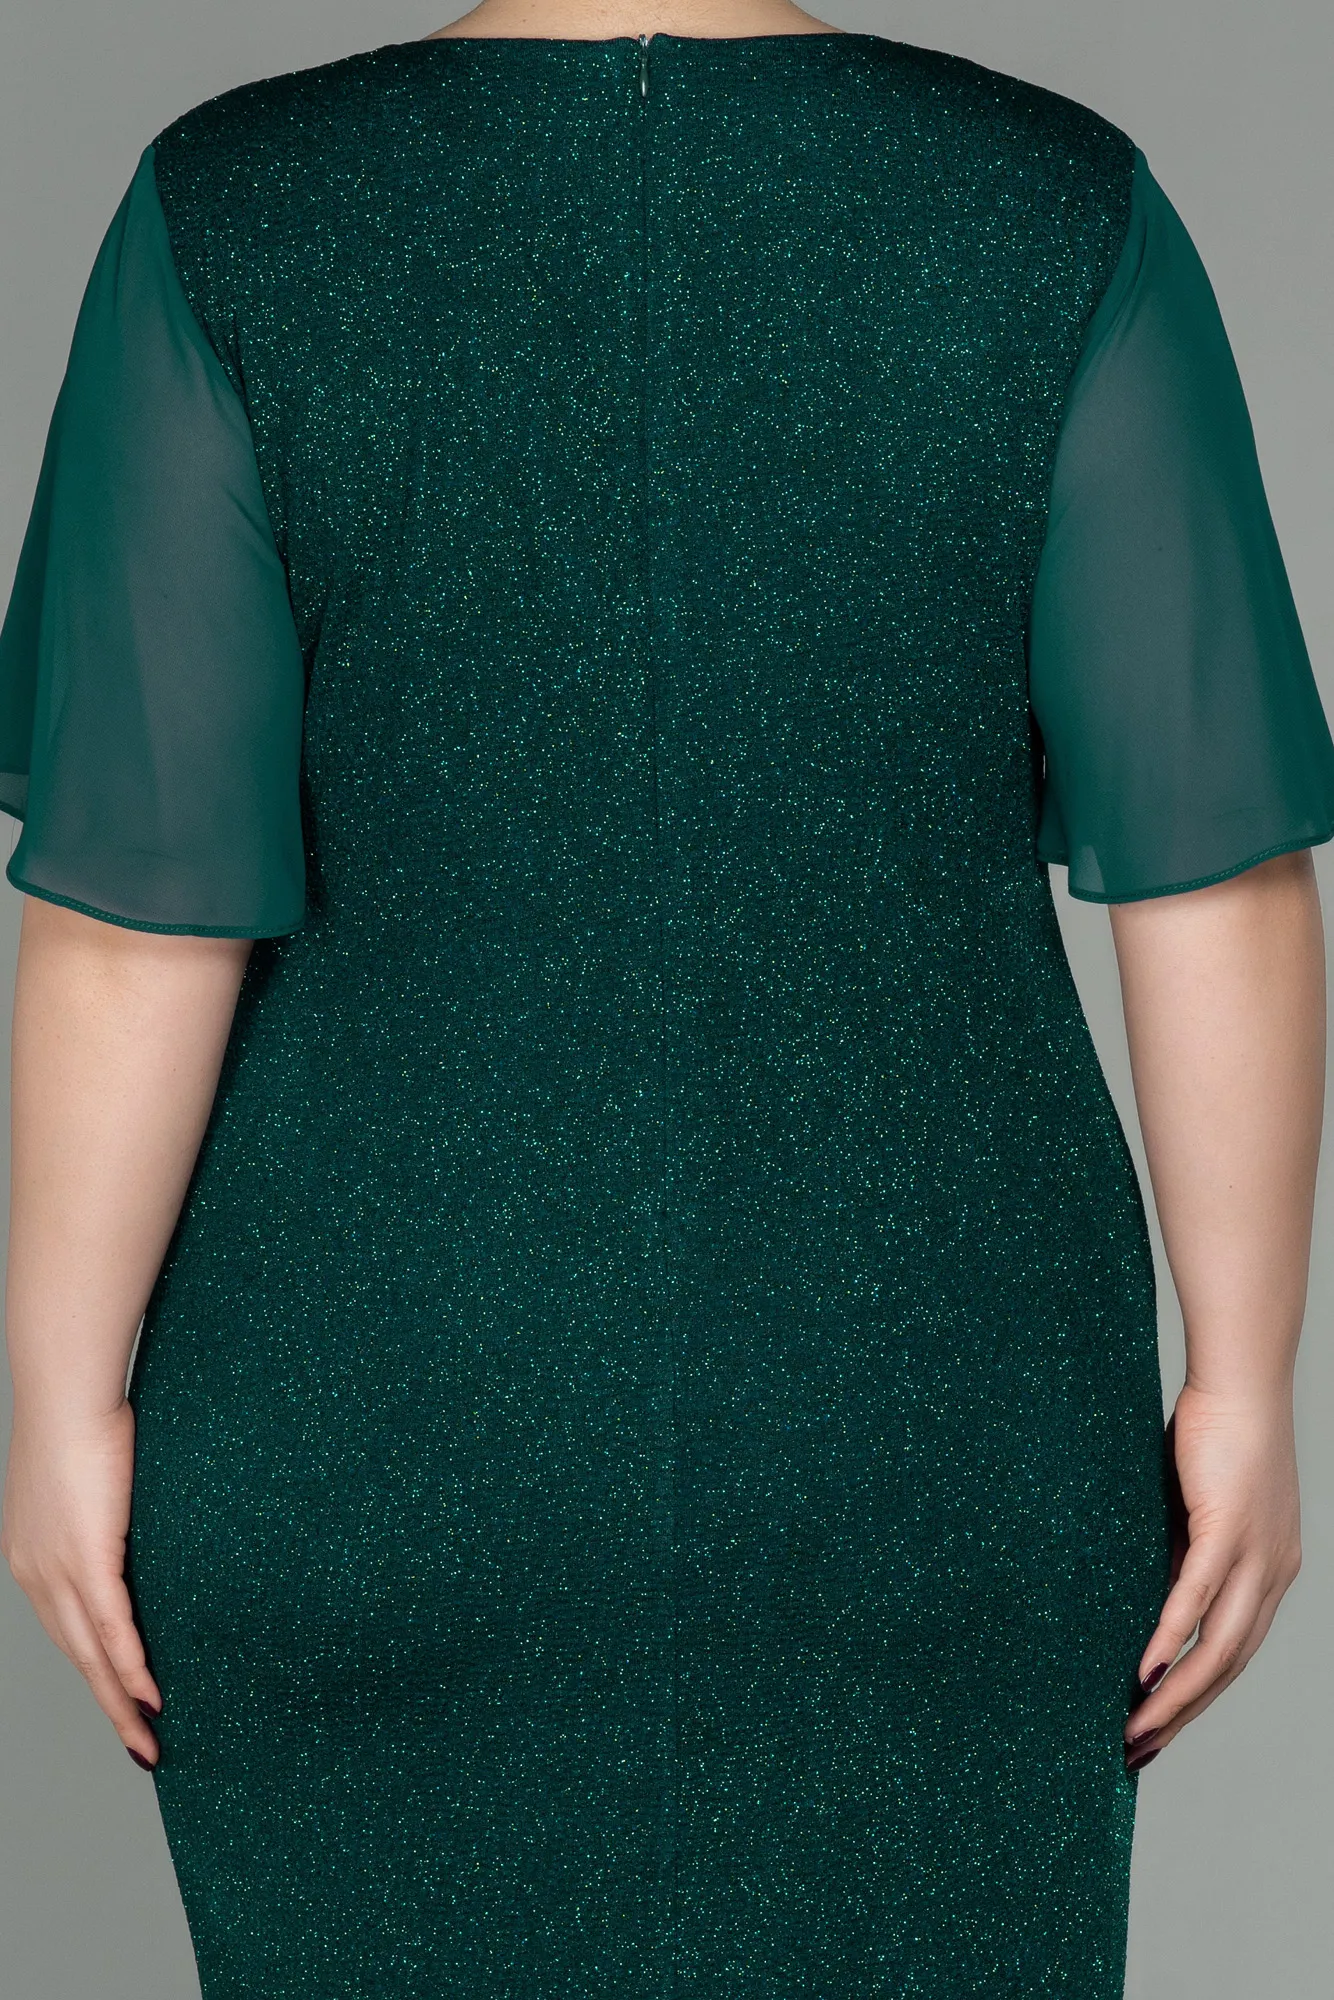 Emerald Green-Midi Plus Size Evening Dress ABK1511